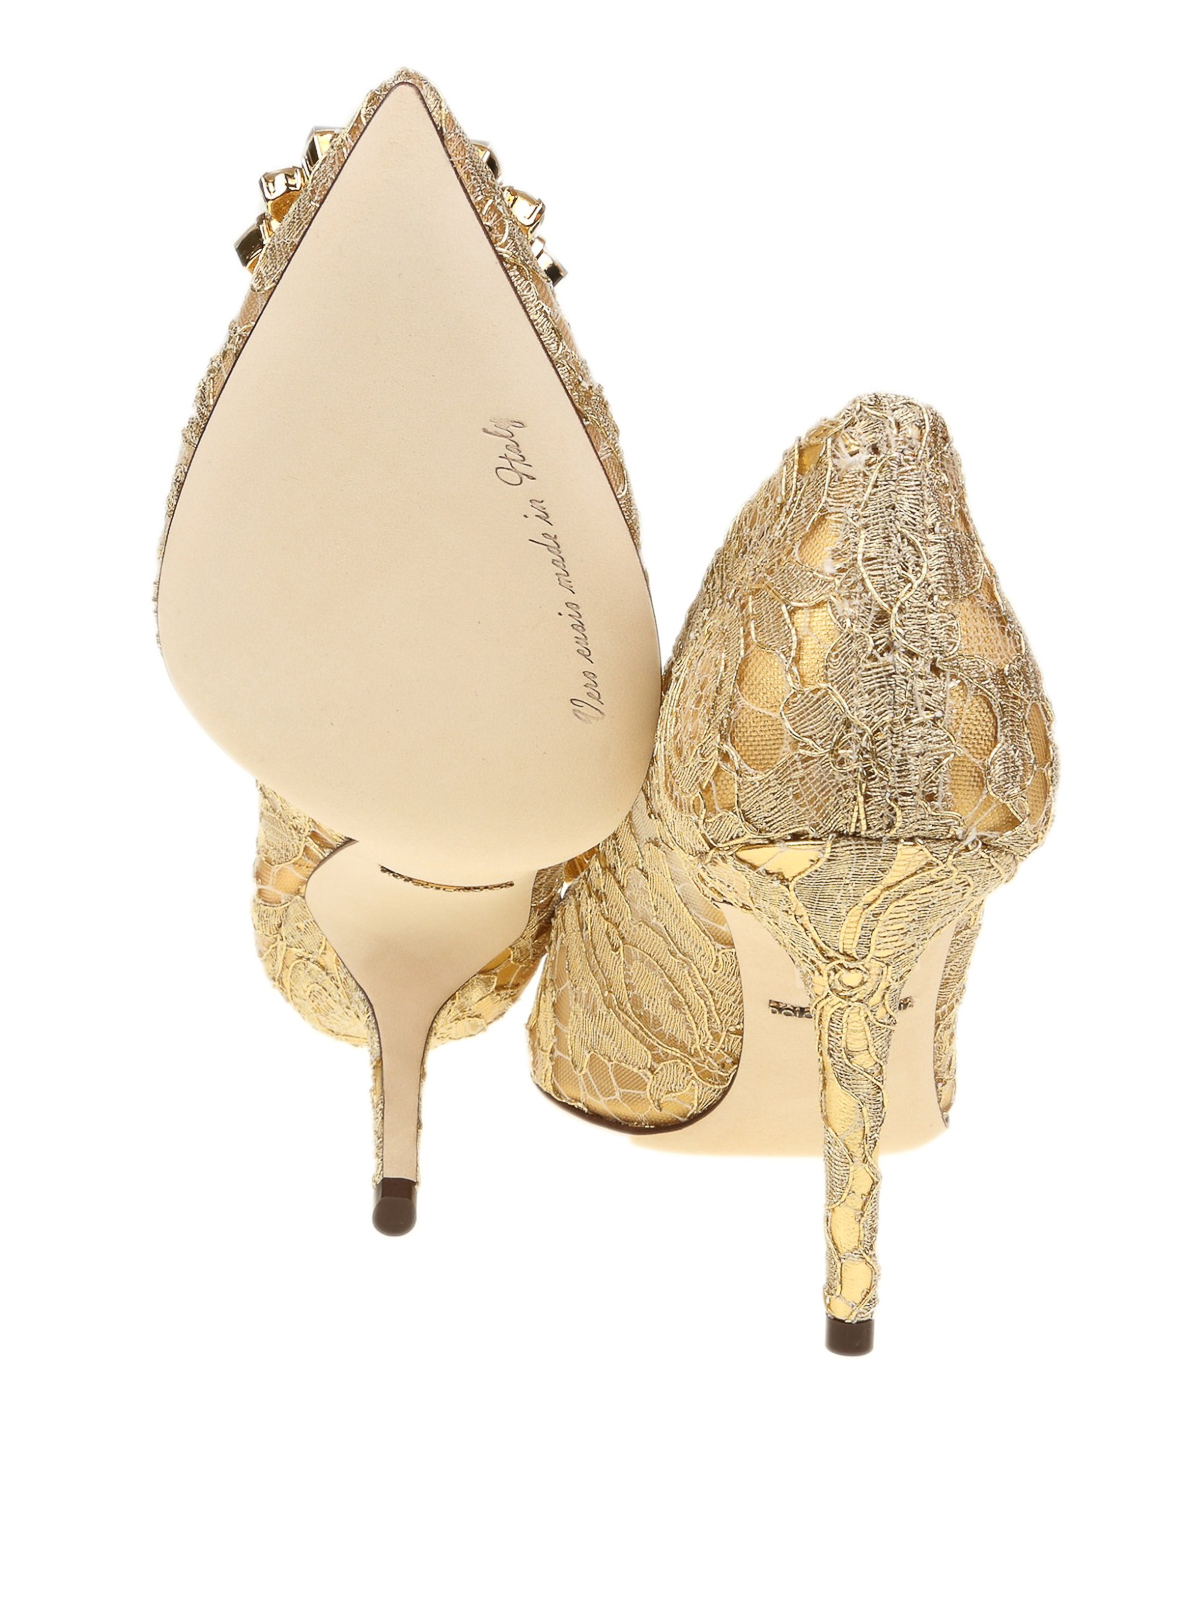 Court shoes Dolce & Gabbana - Bellucci Taormina gold lace jewel pumps -  CD0101AE63780997